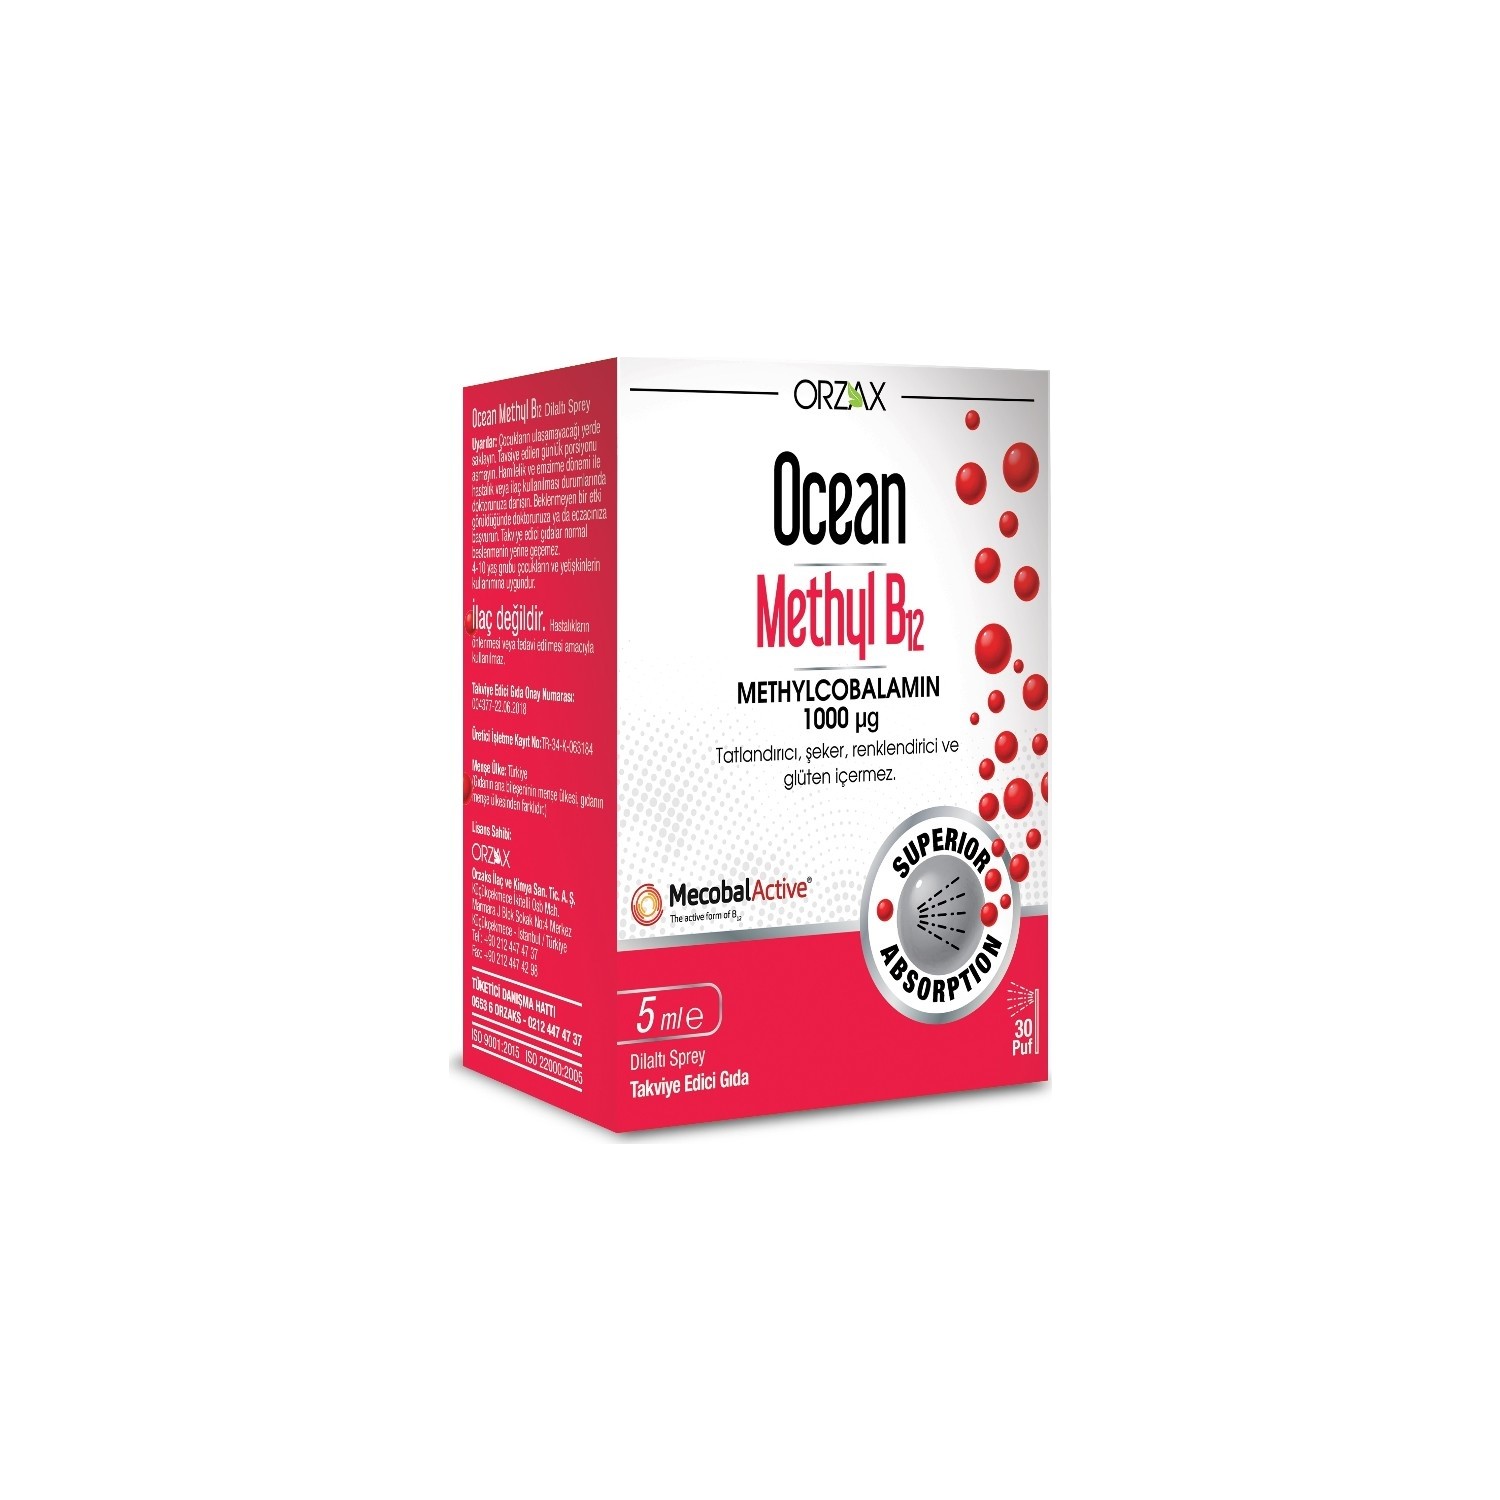 спрей orzax ocean methyl b12 1000 мкг 5 упаковок по 10 мл Метилкобаламин Ocean Methyl B12 1000 мг, 2 упаковки по 5 мл